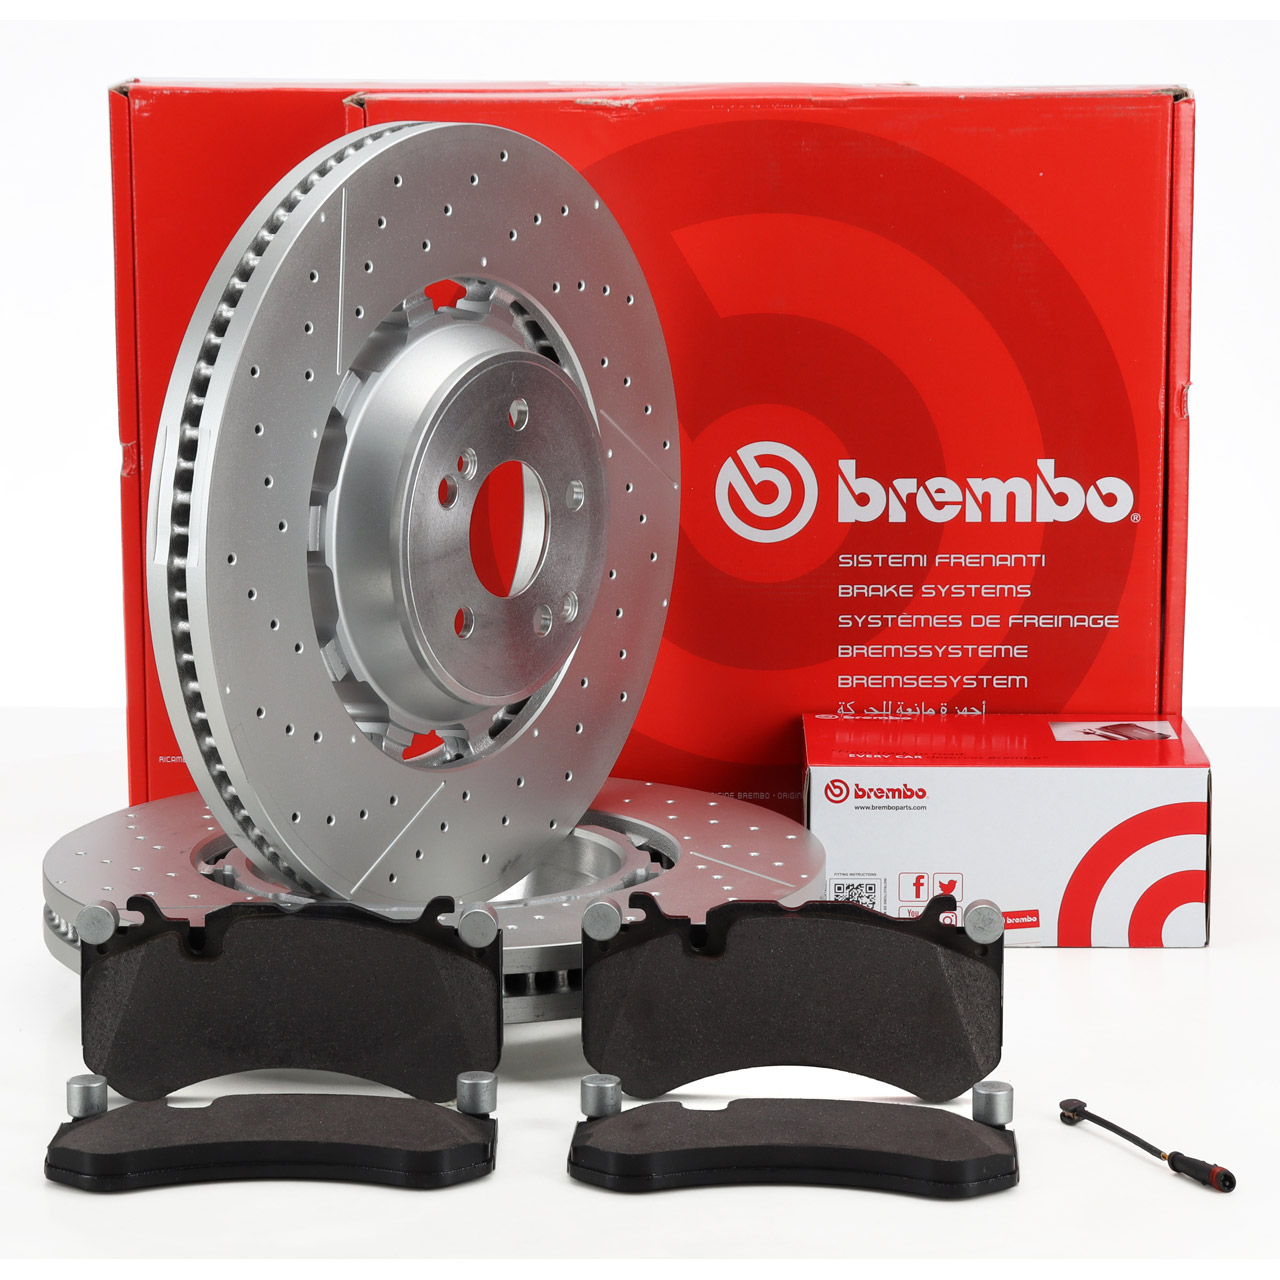 BREMBO Bremsen Sets - 09.C127.33, P 50 142, GBK 412 